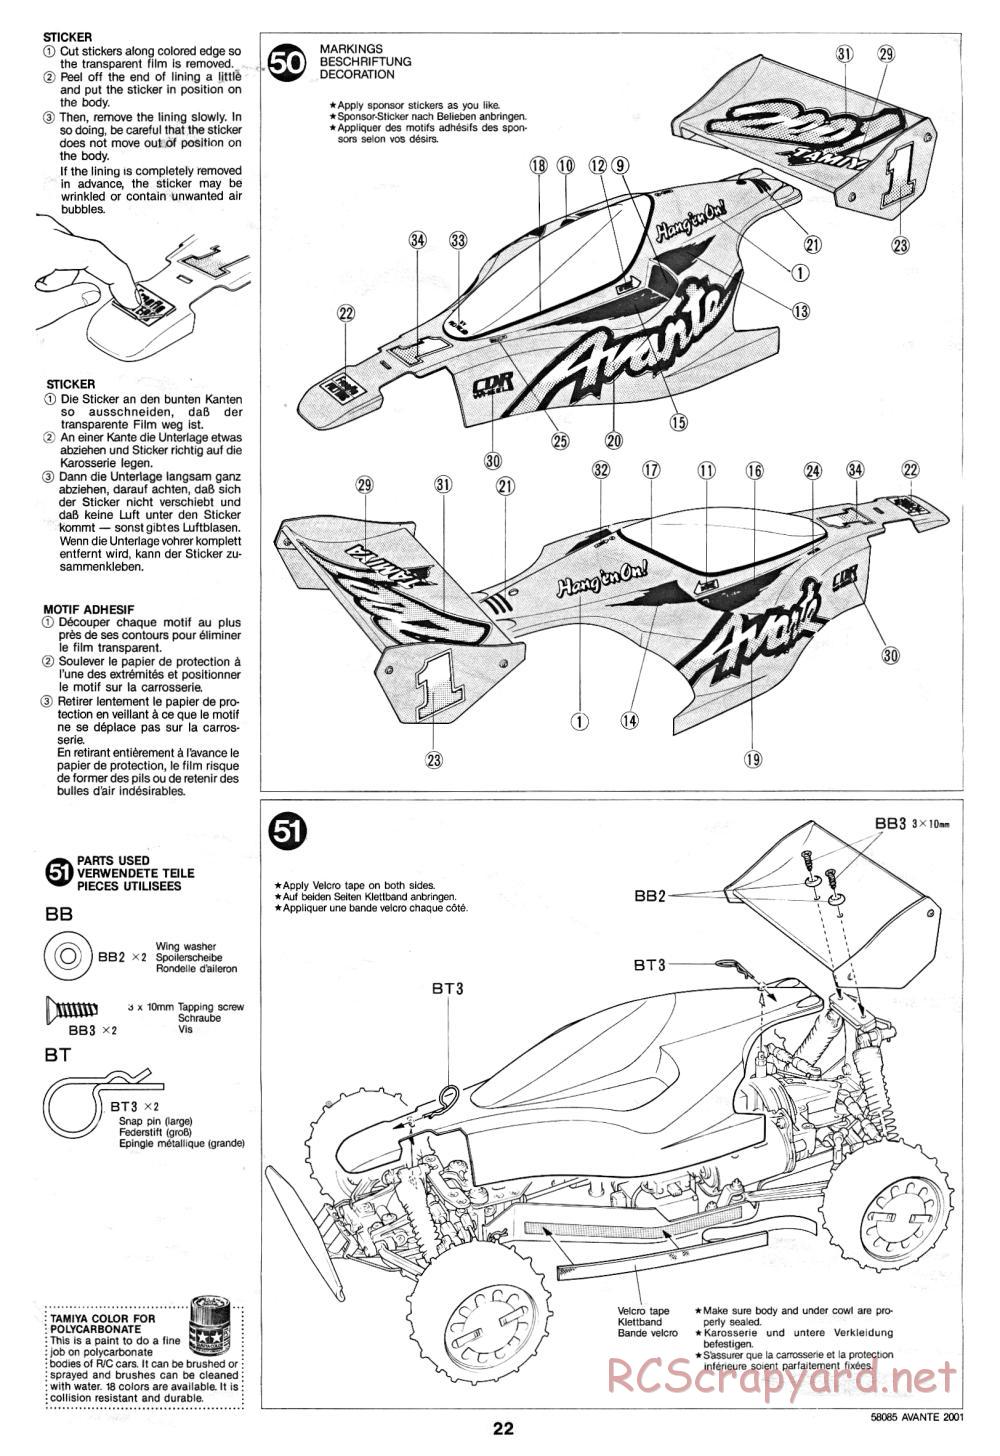 Tamiya - Avante 2001 - 58085 - Manual - Page 22